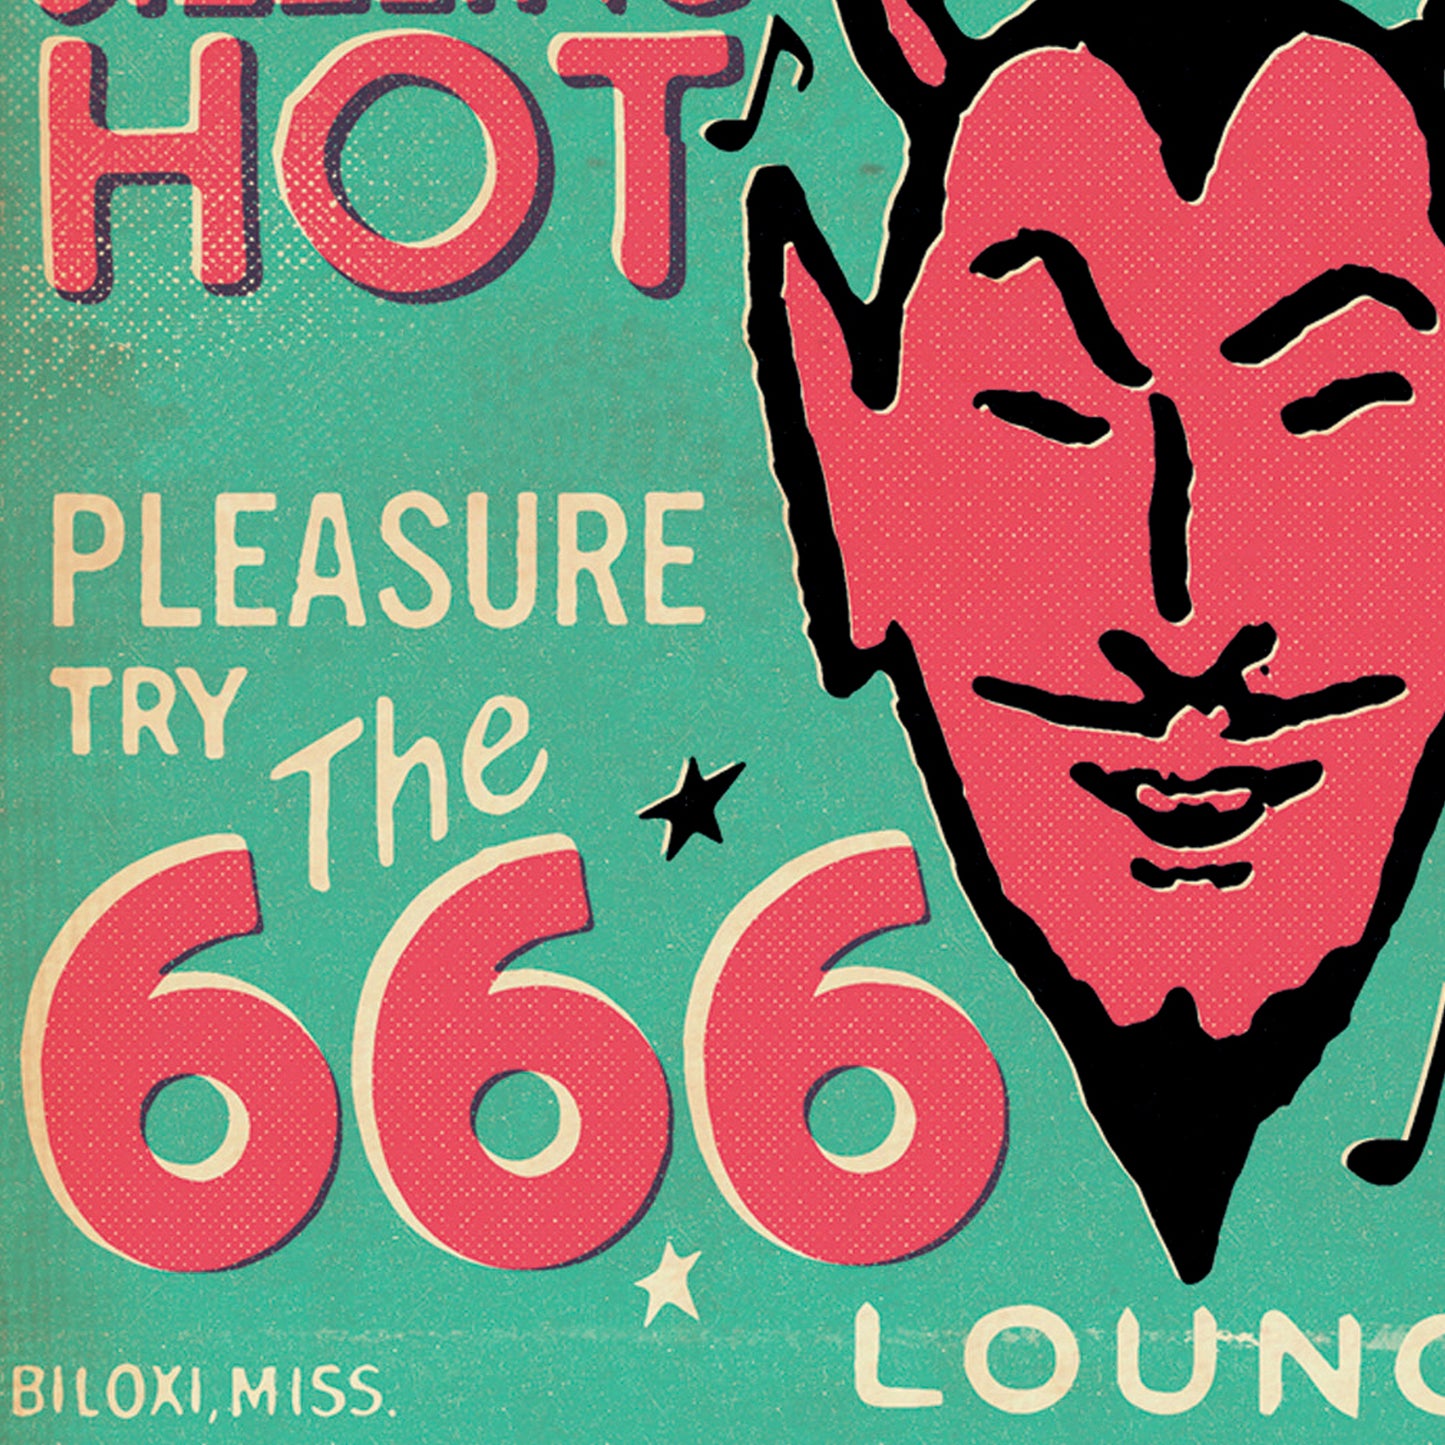 Matchbox Card: 666 Lounge